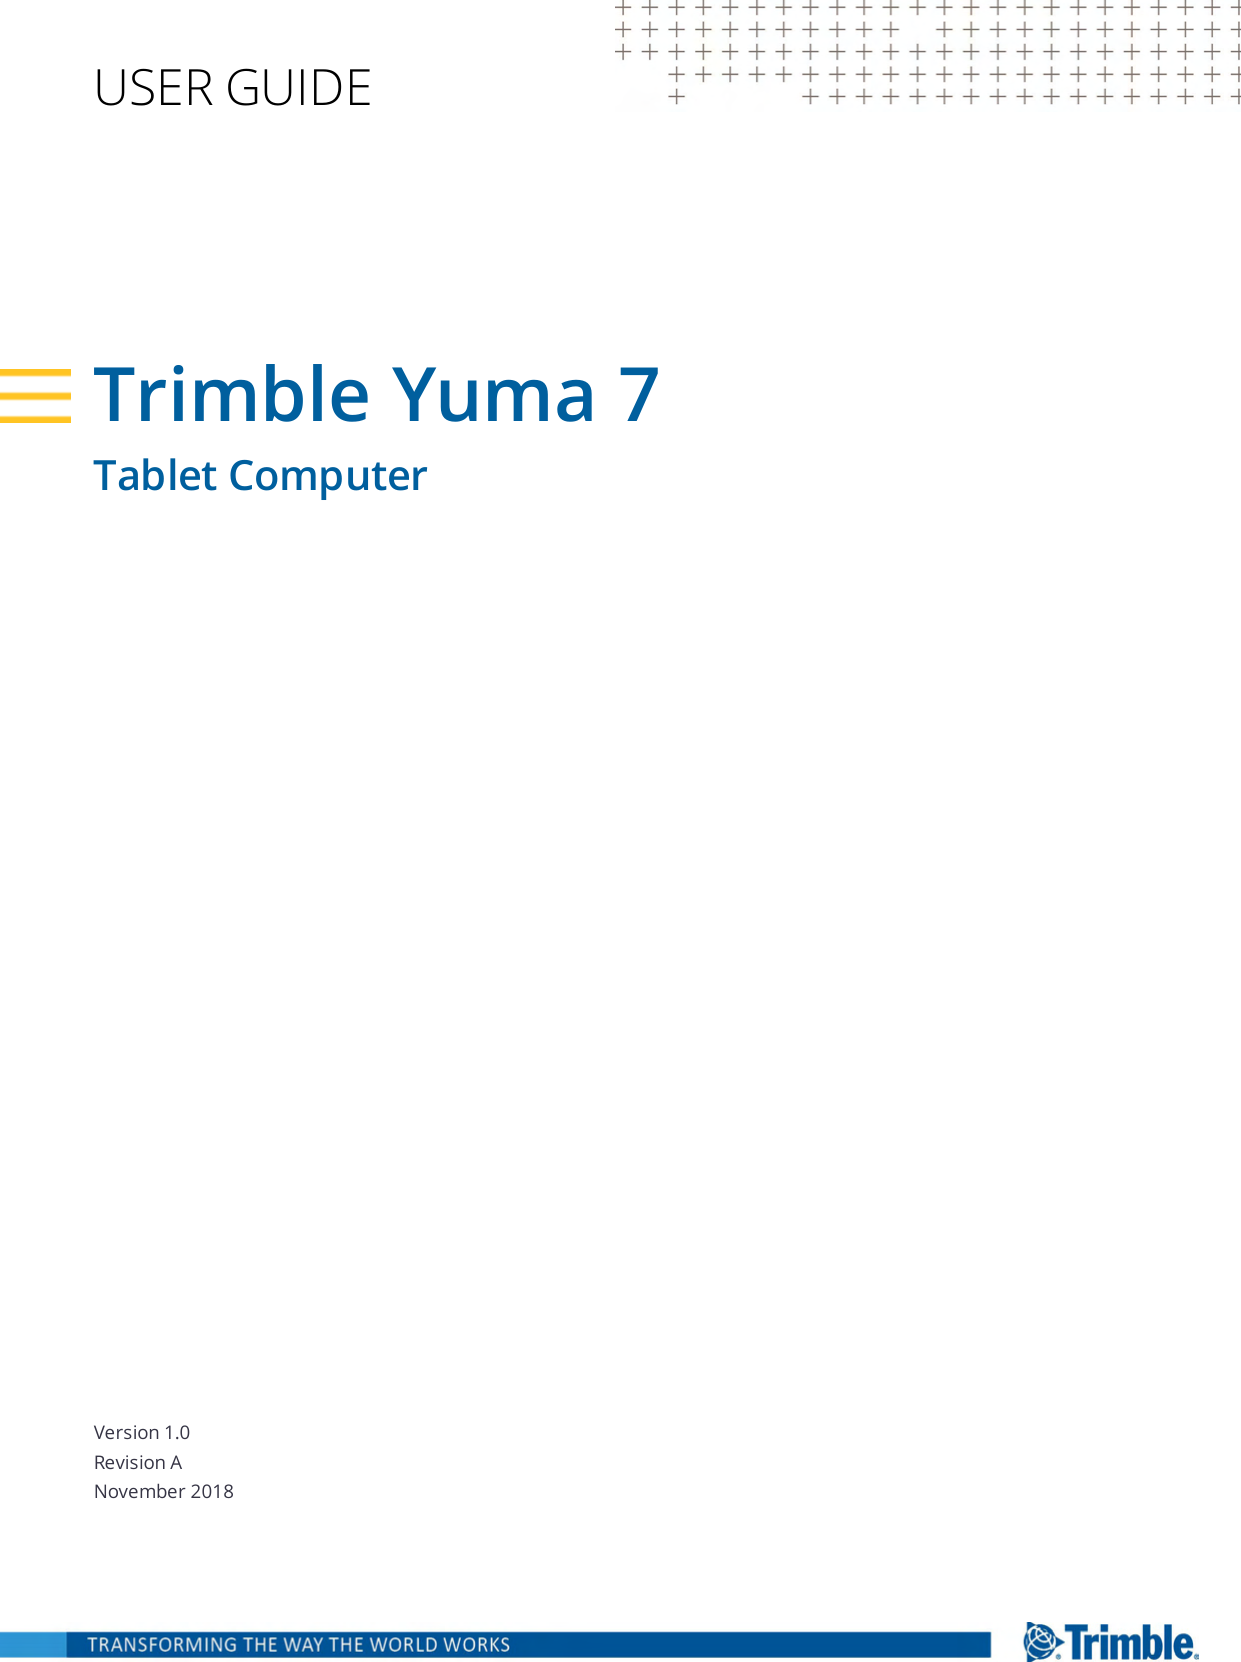 Version 1.0Revision ANovember 2018USER GUIDETrimble Yuma 7Tablet Computer